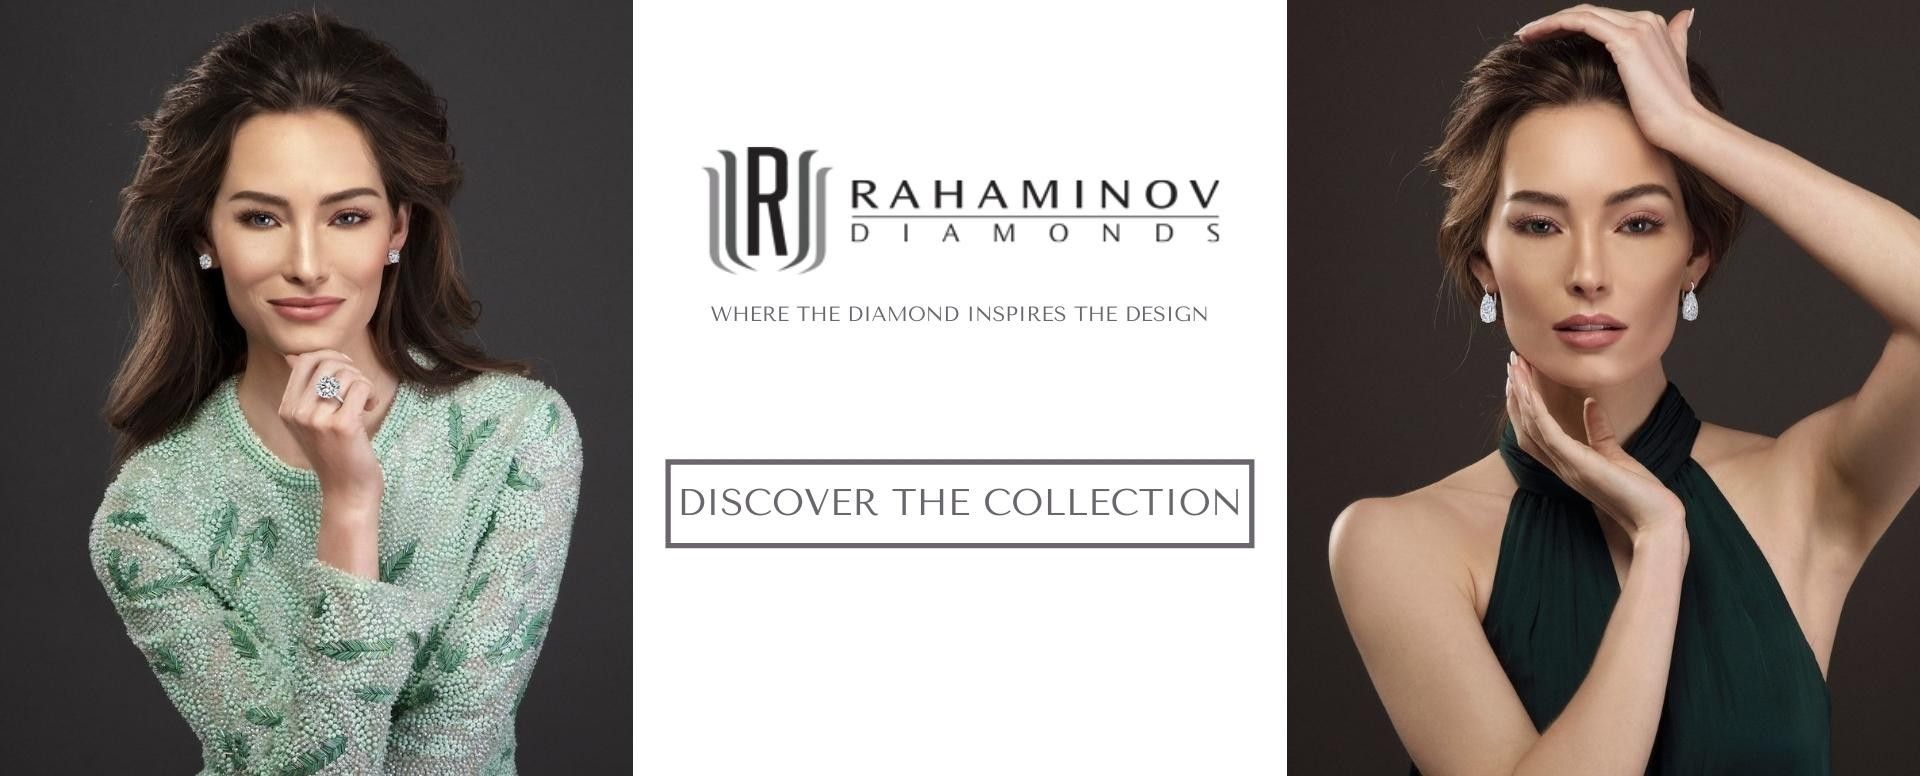 rahaminov diamonds where the diamond inspires the design discover the collection